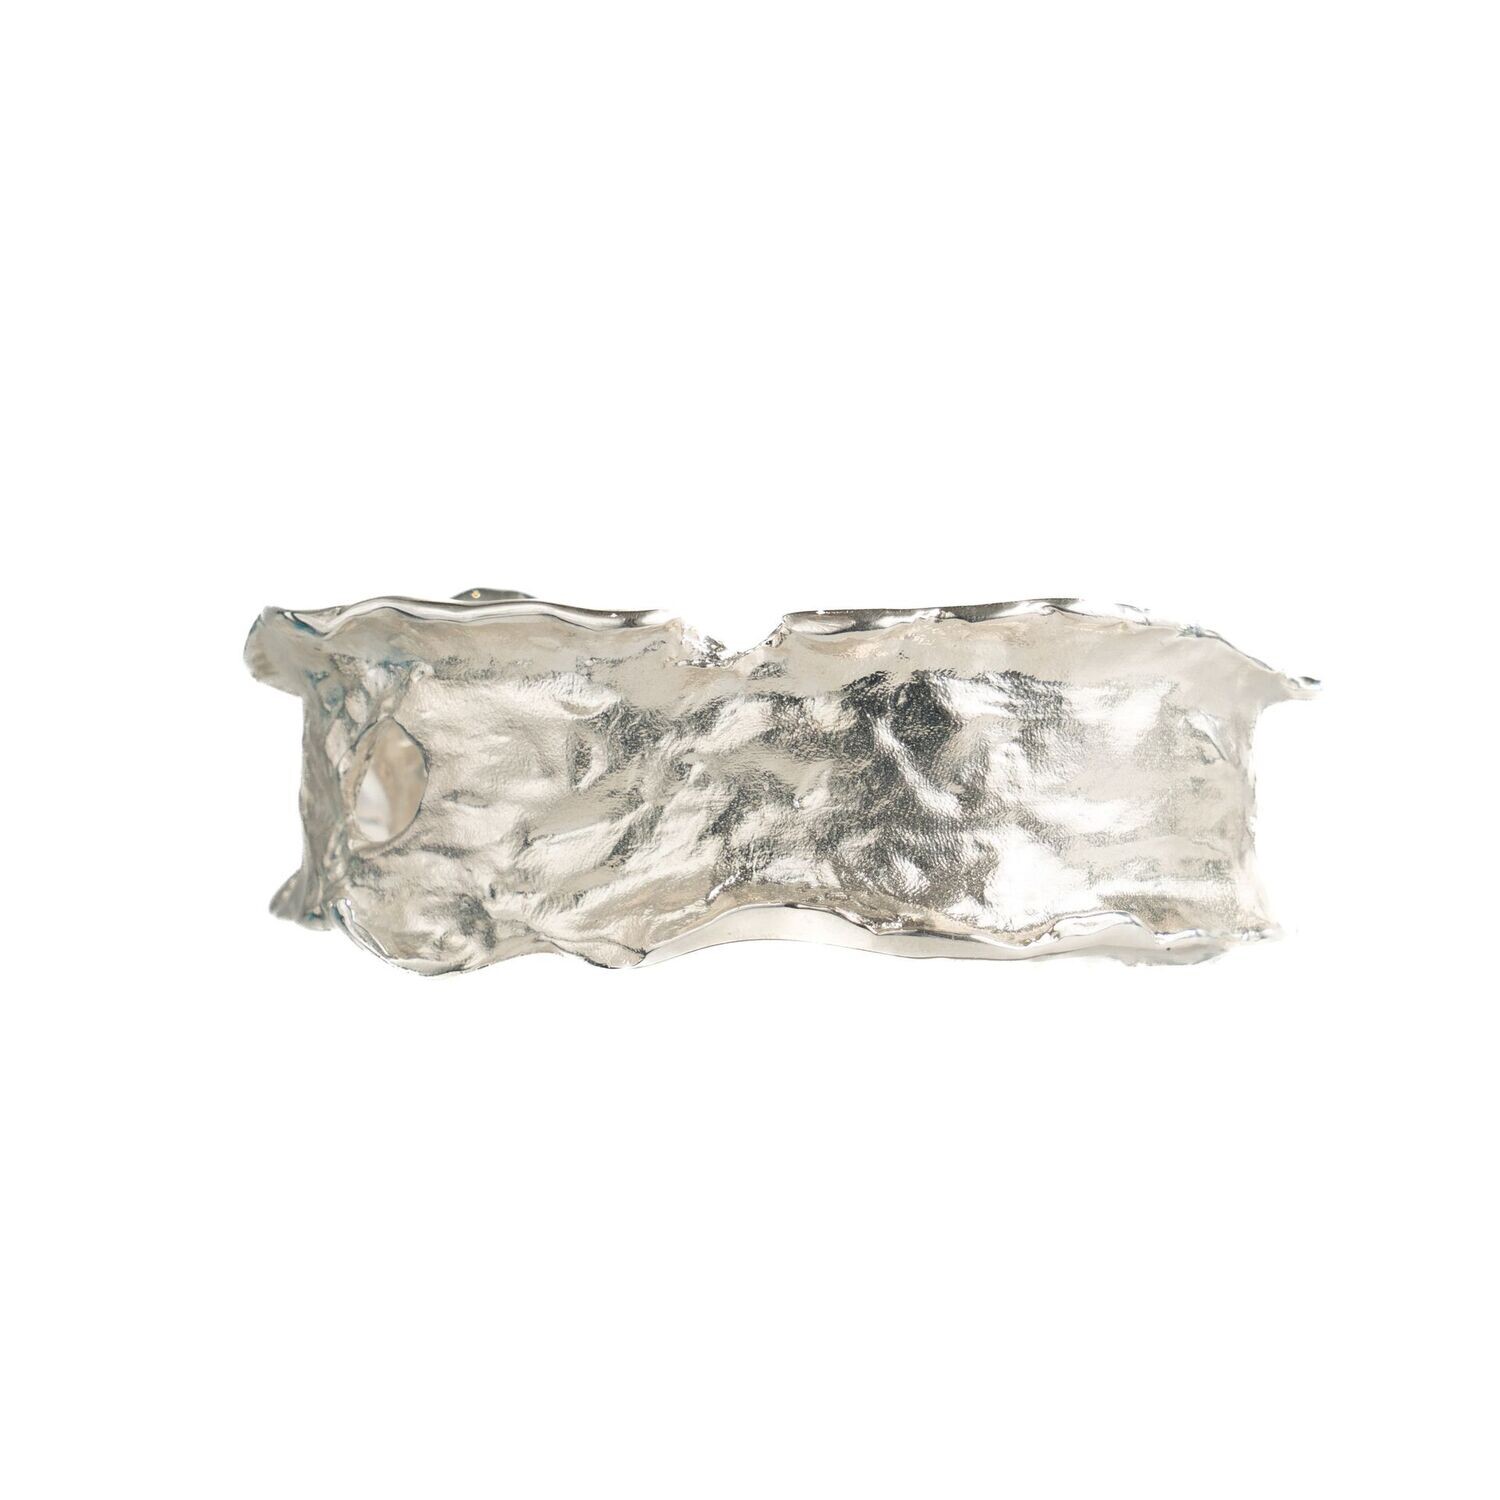 Oceanus silver cuff